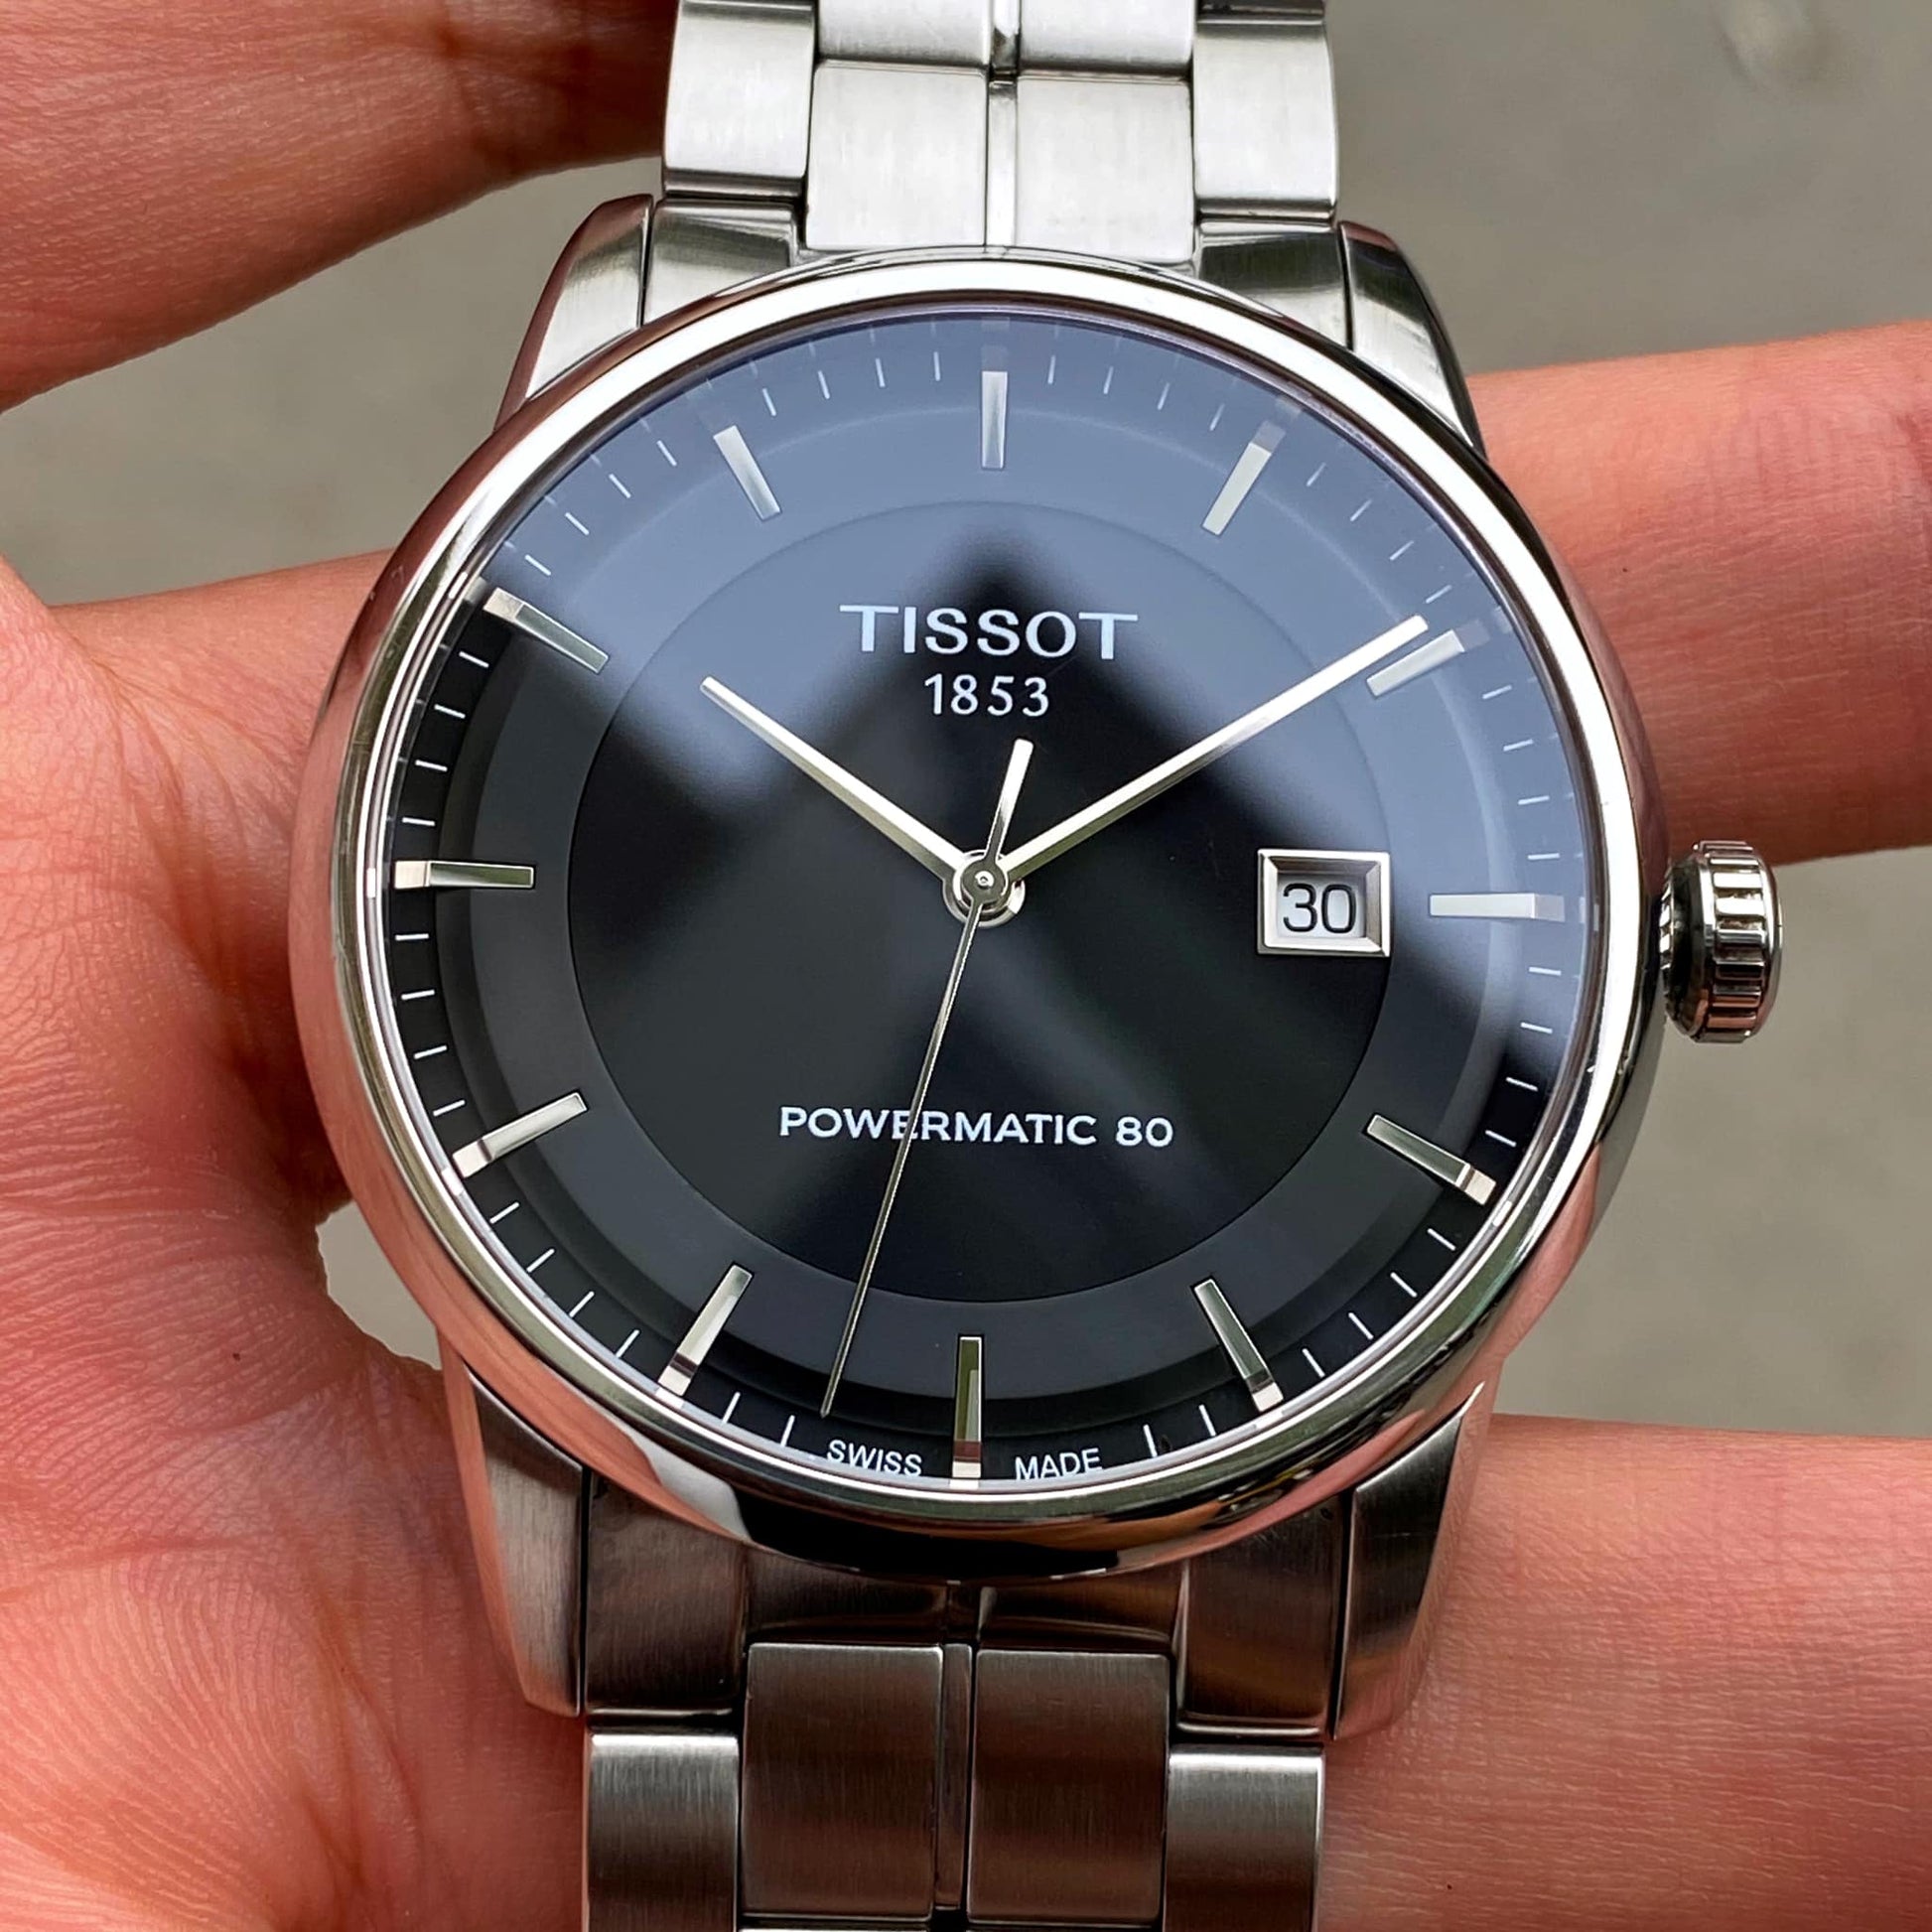 Tissot Luxury Powermatic 80 Watch For Men - T086.407.11.051.00